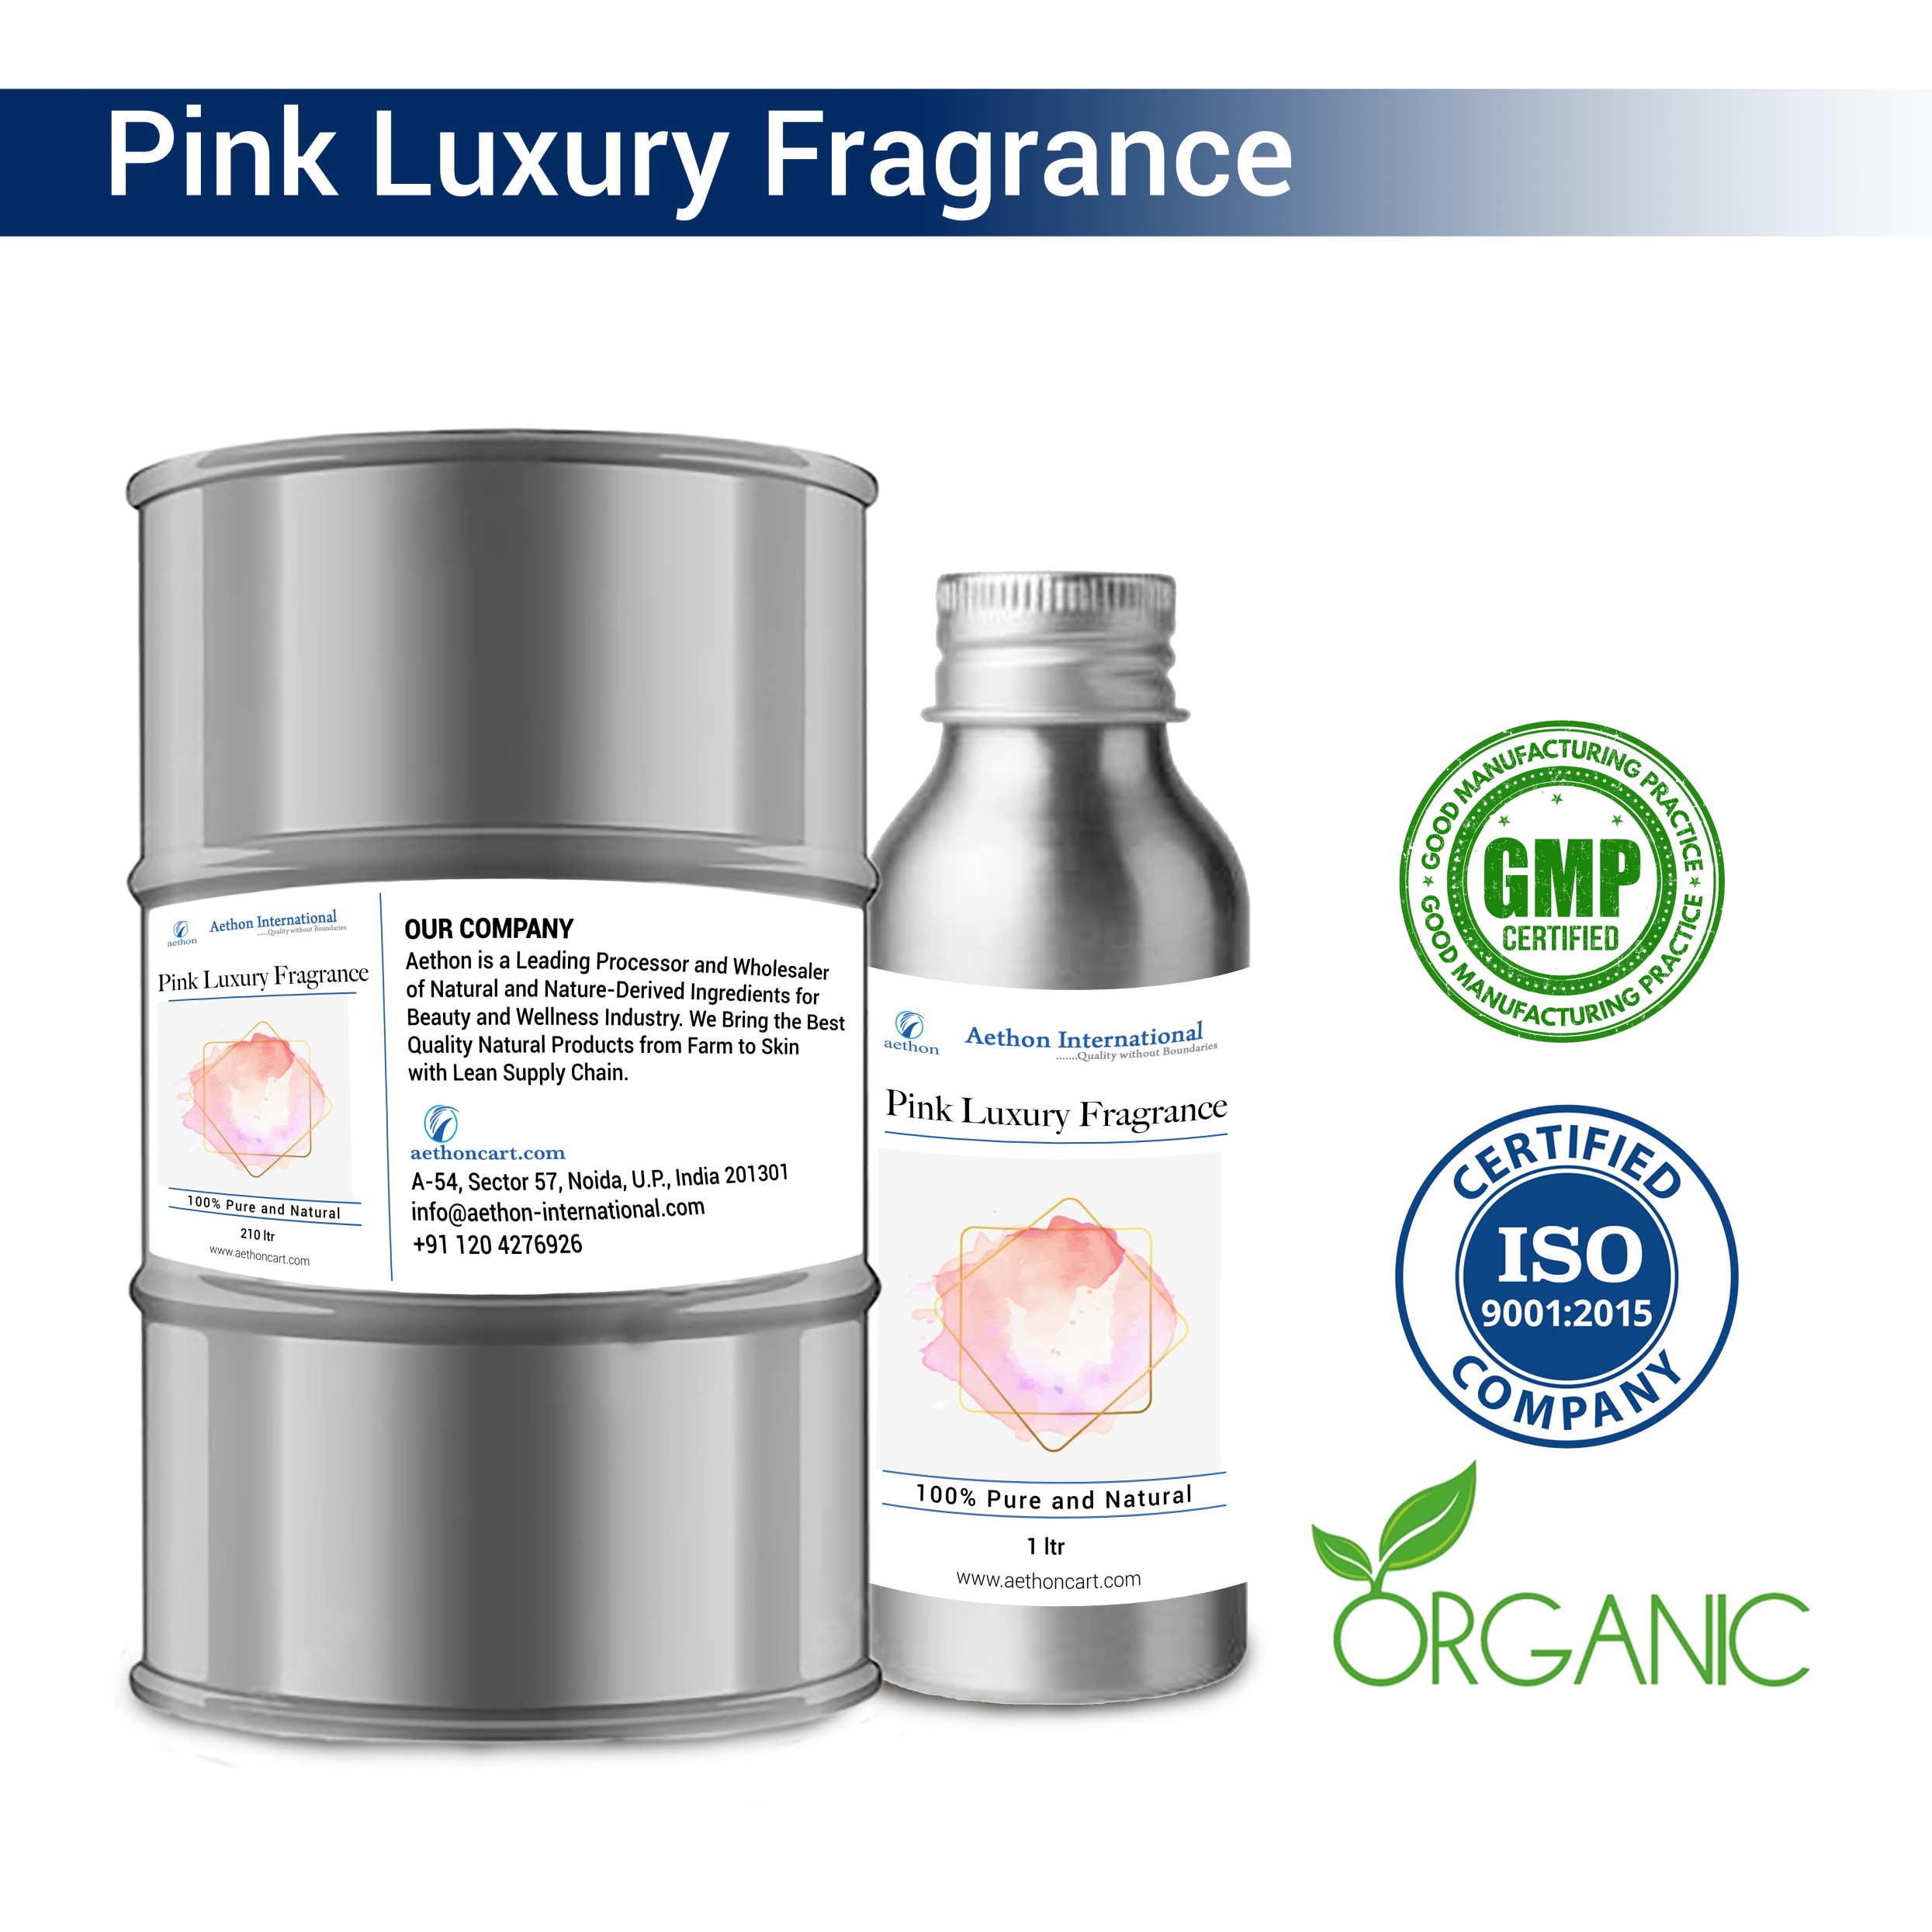 Pink Luxury Fragrance